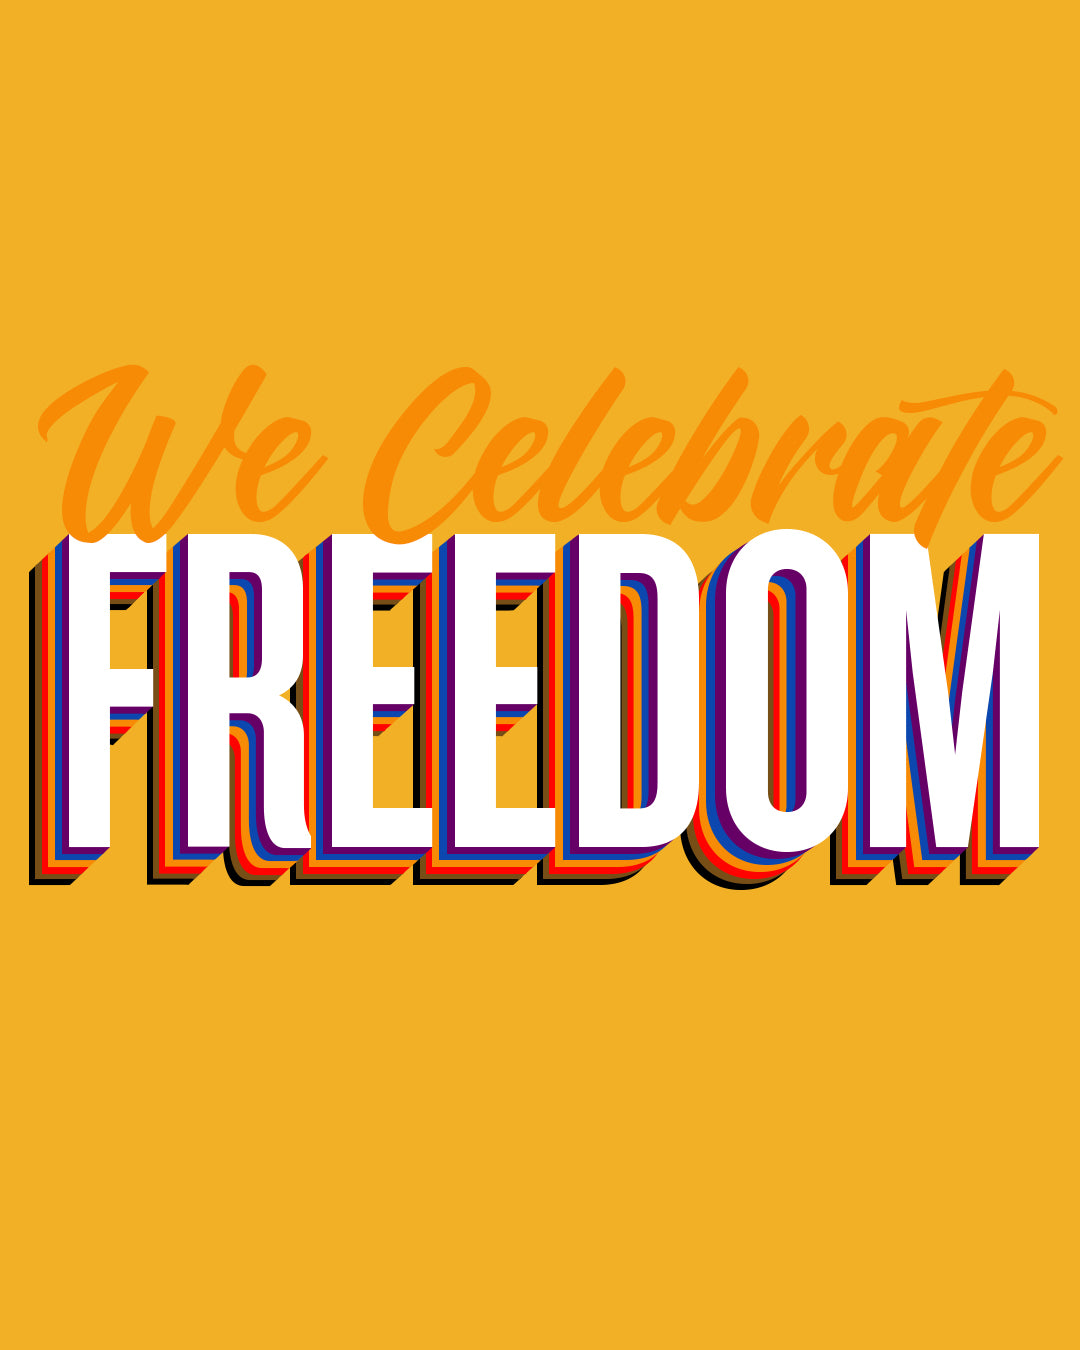 We Celebrate FREEDOM